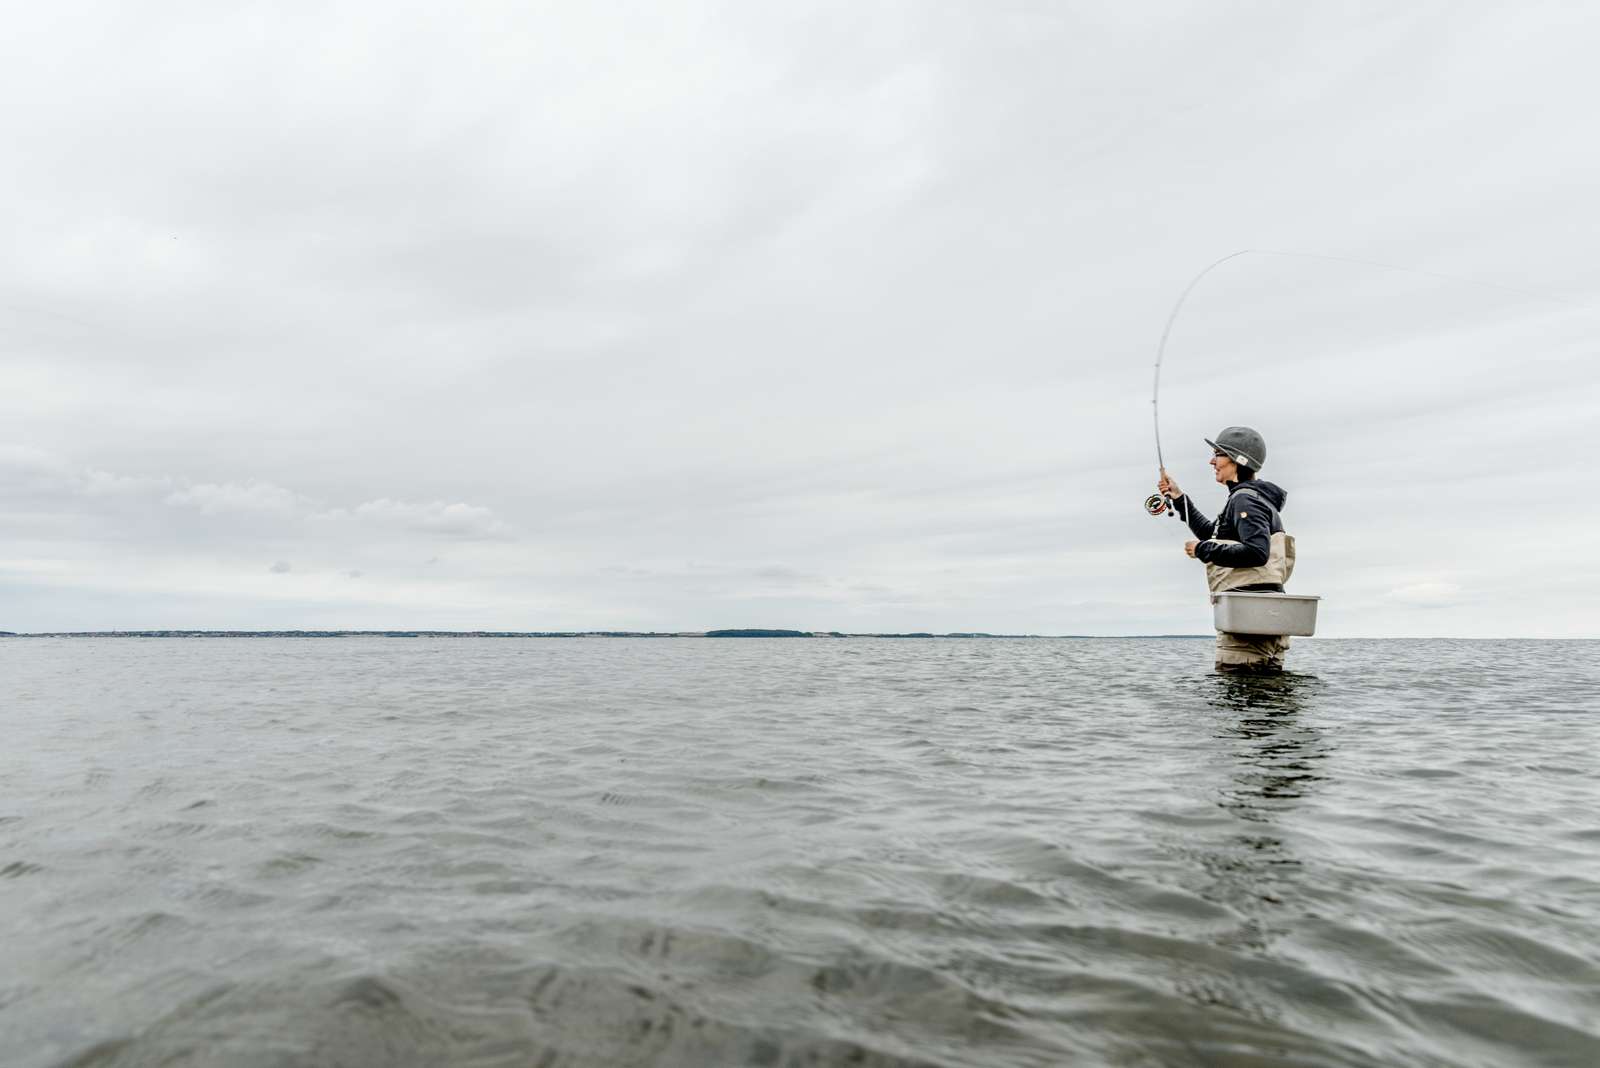 Danish woman fishing, Mors, Destination Limfjorden